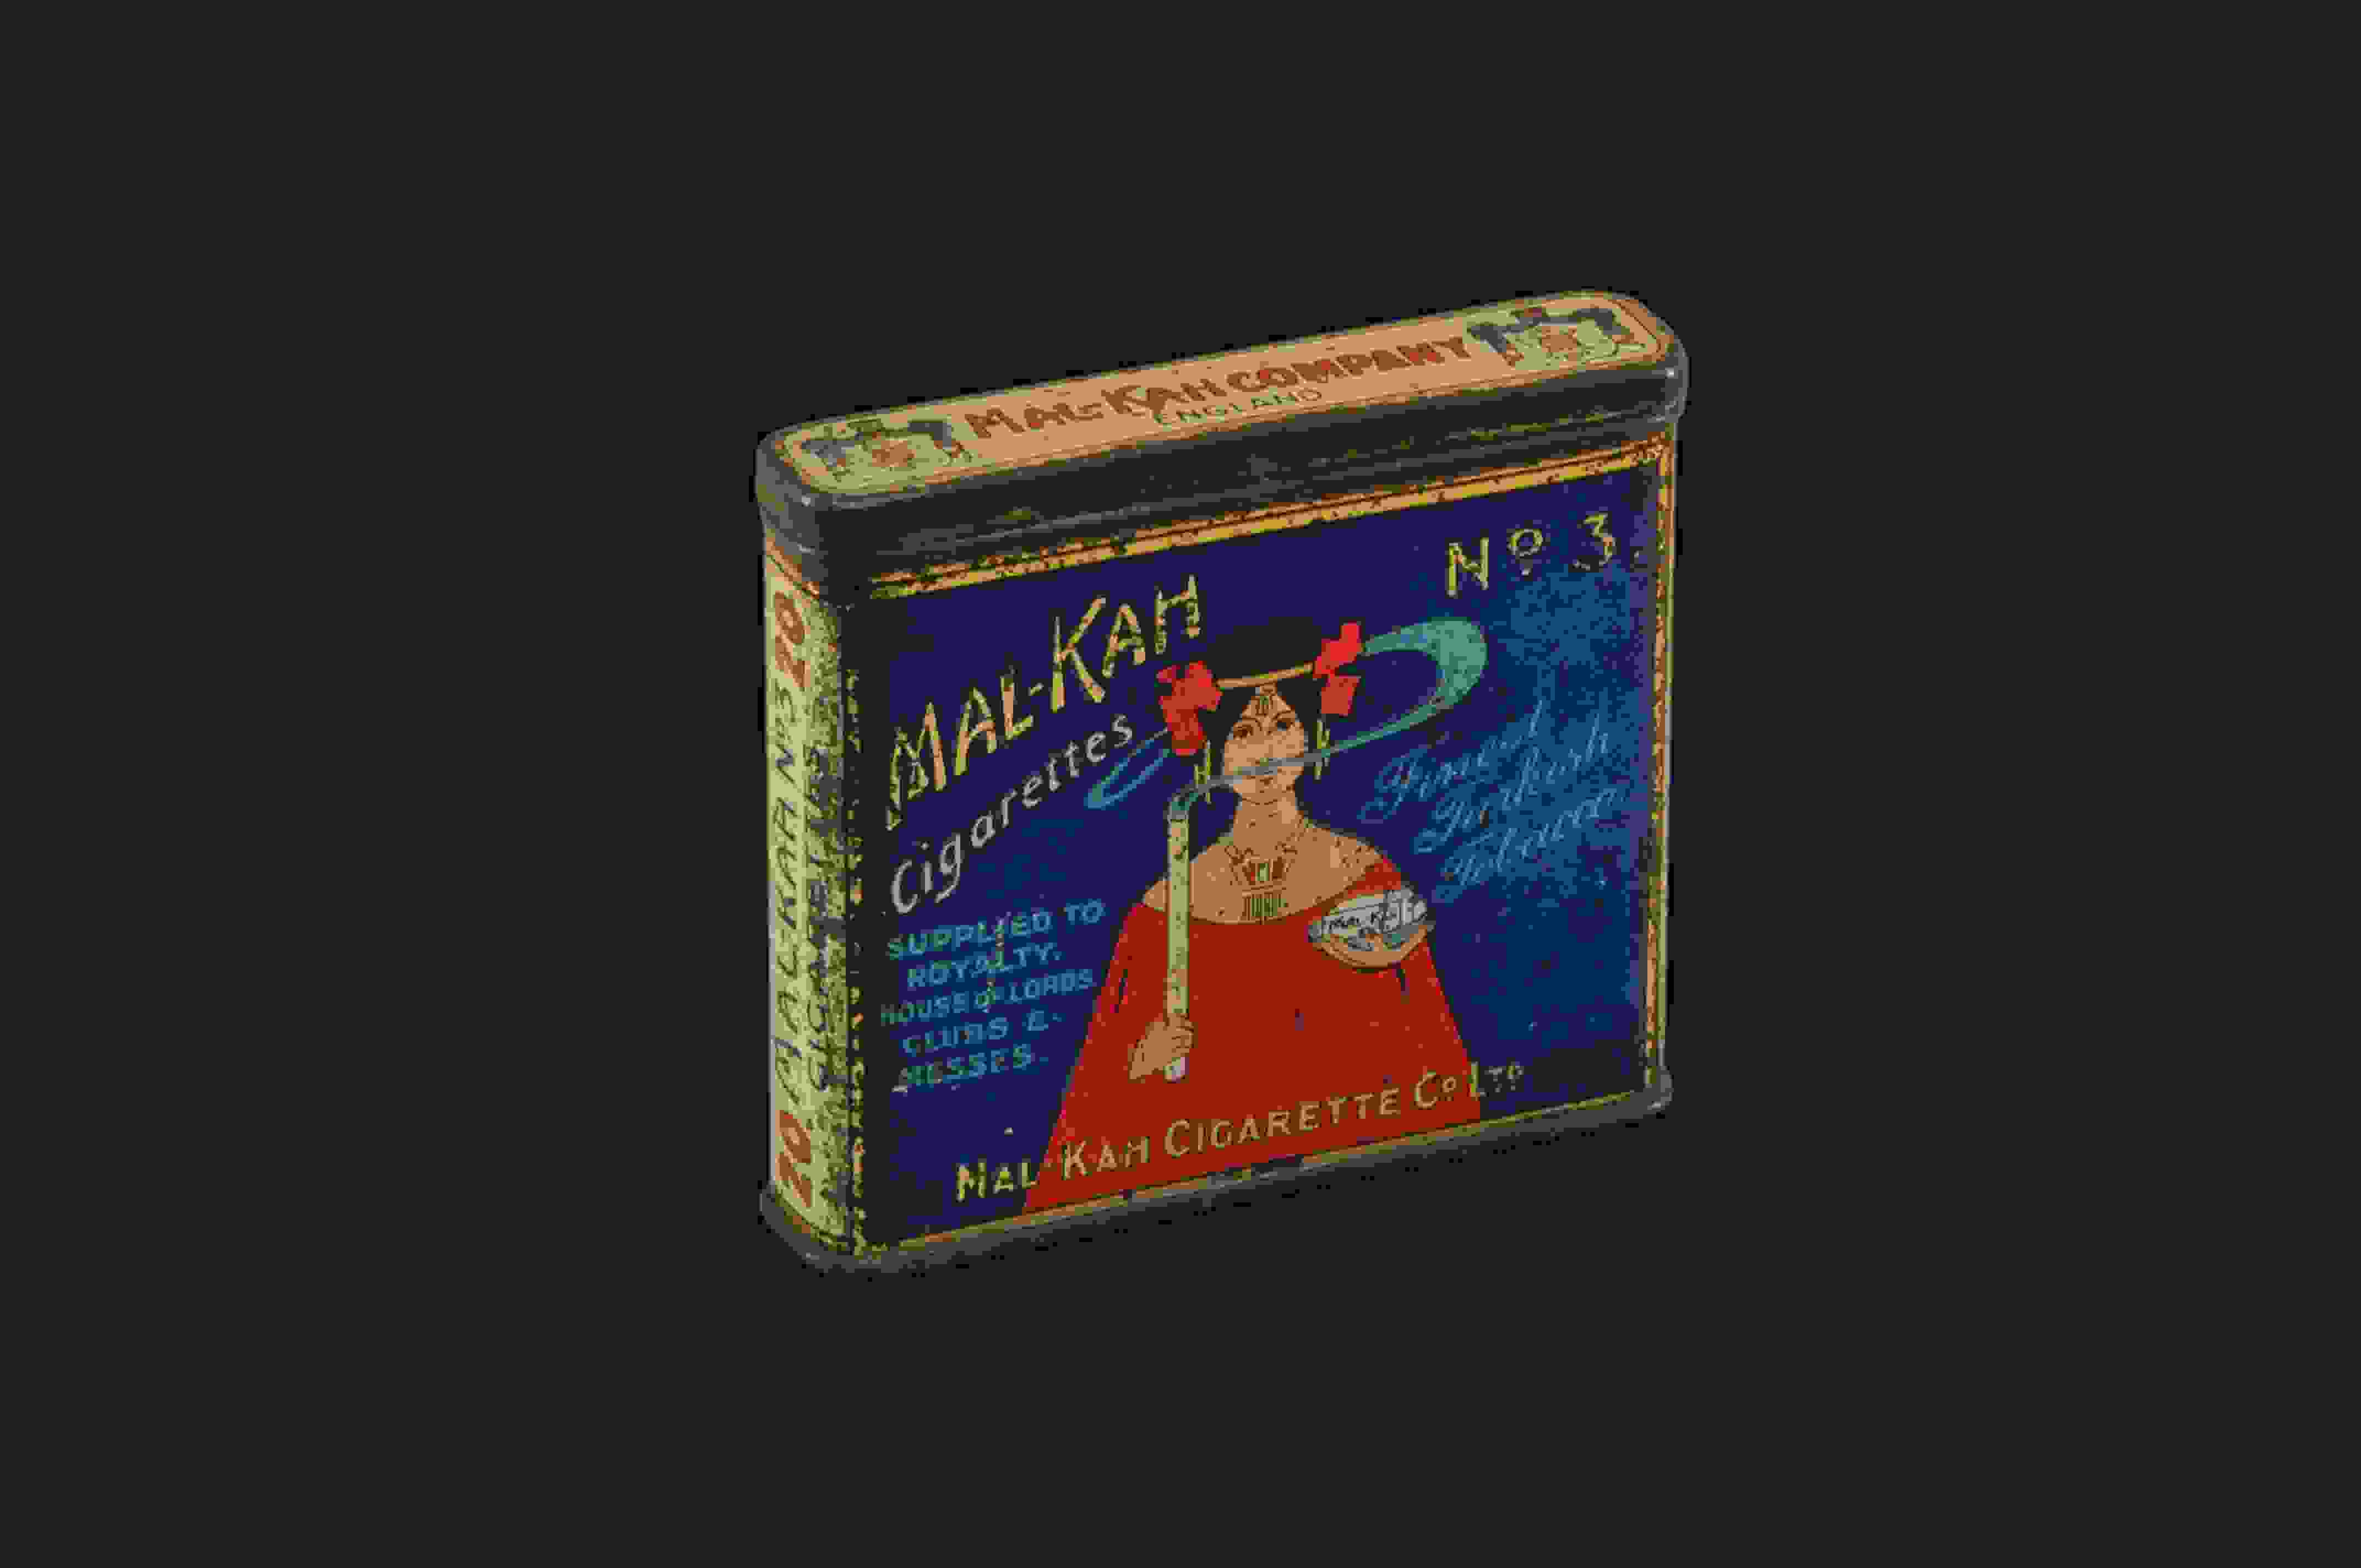 Mal-Kah Cigarettes No. 3 